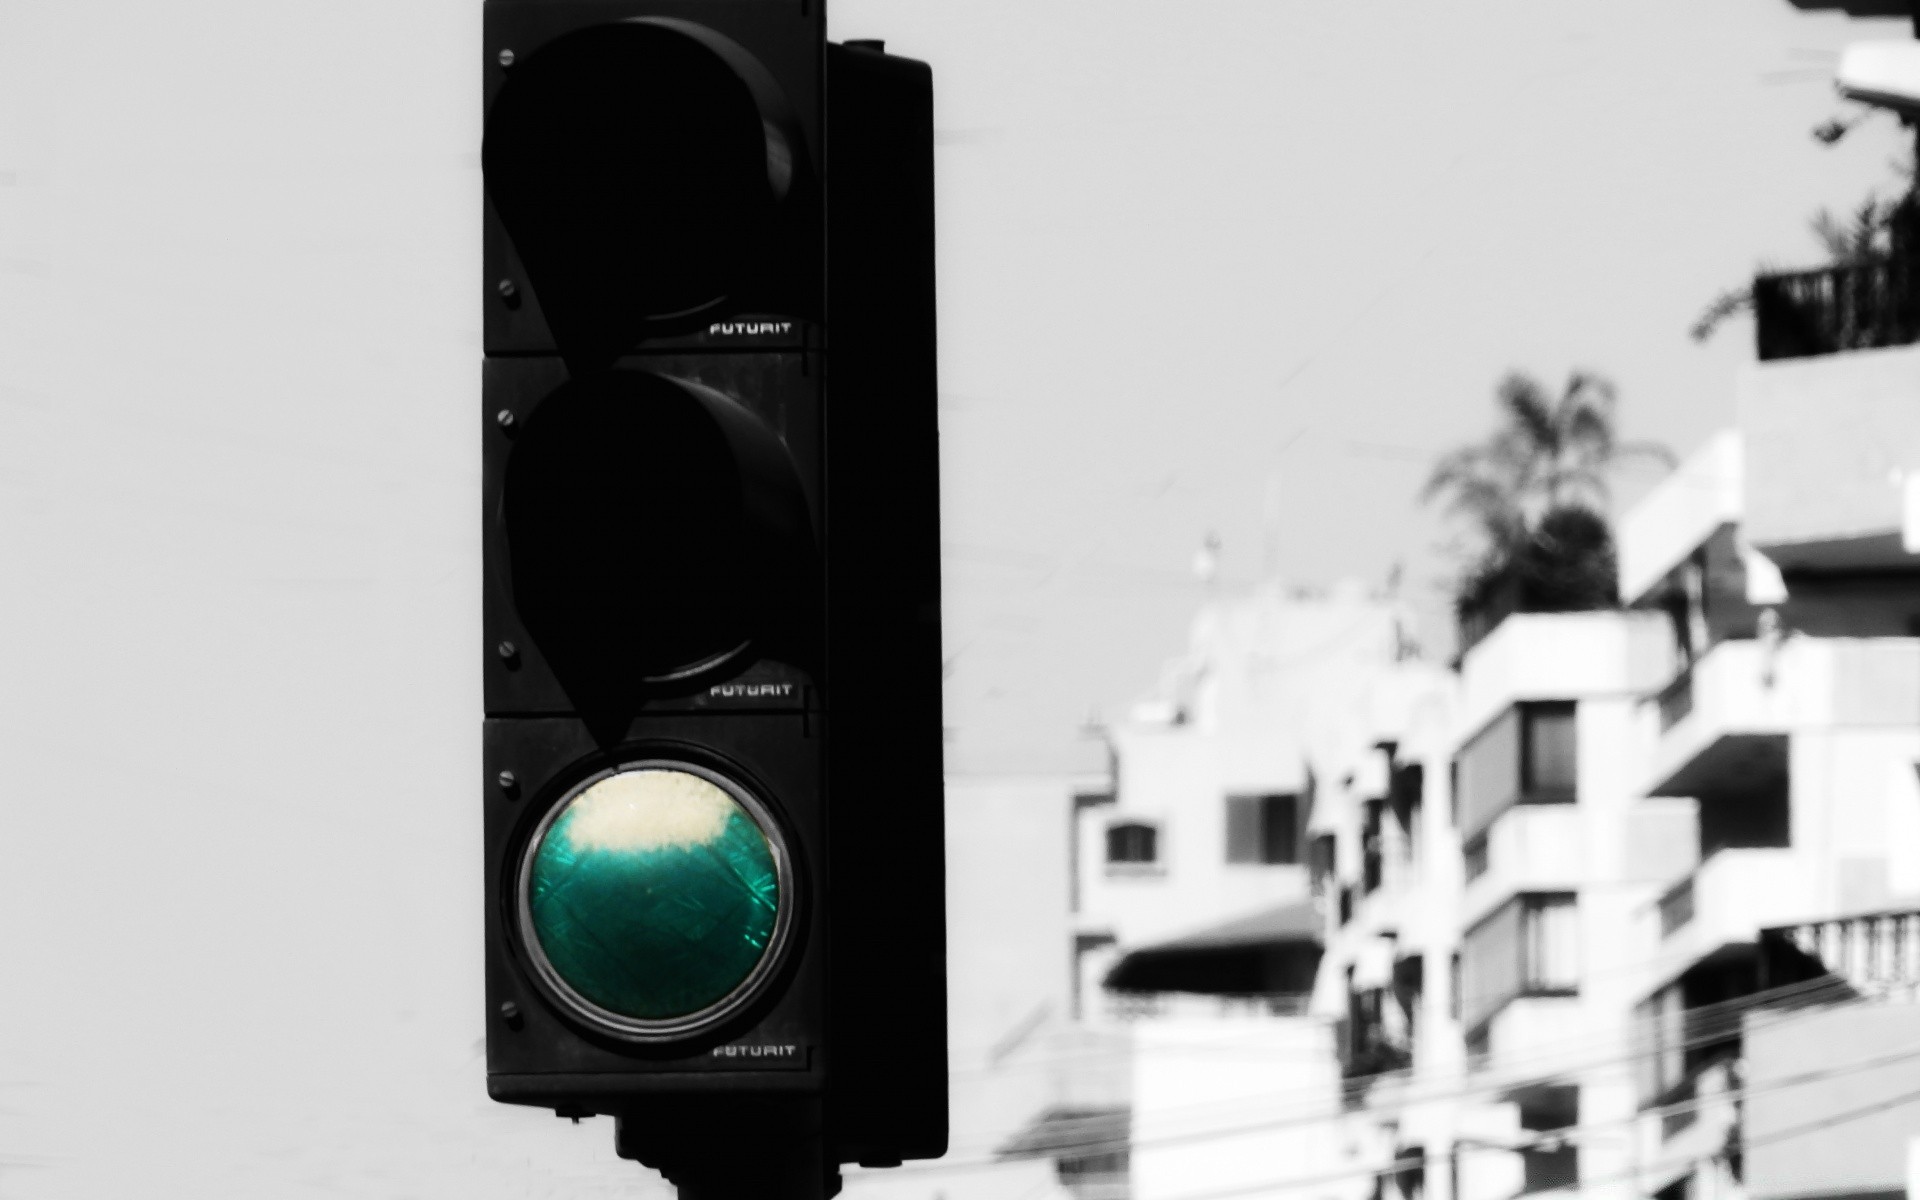 black and white street stoplight intersection semaphore traffic road city stop light lamp urban sign safety travel crossing warning illuminated transportation system